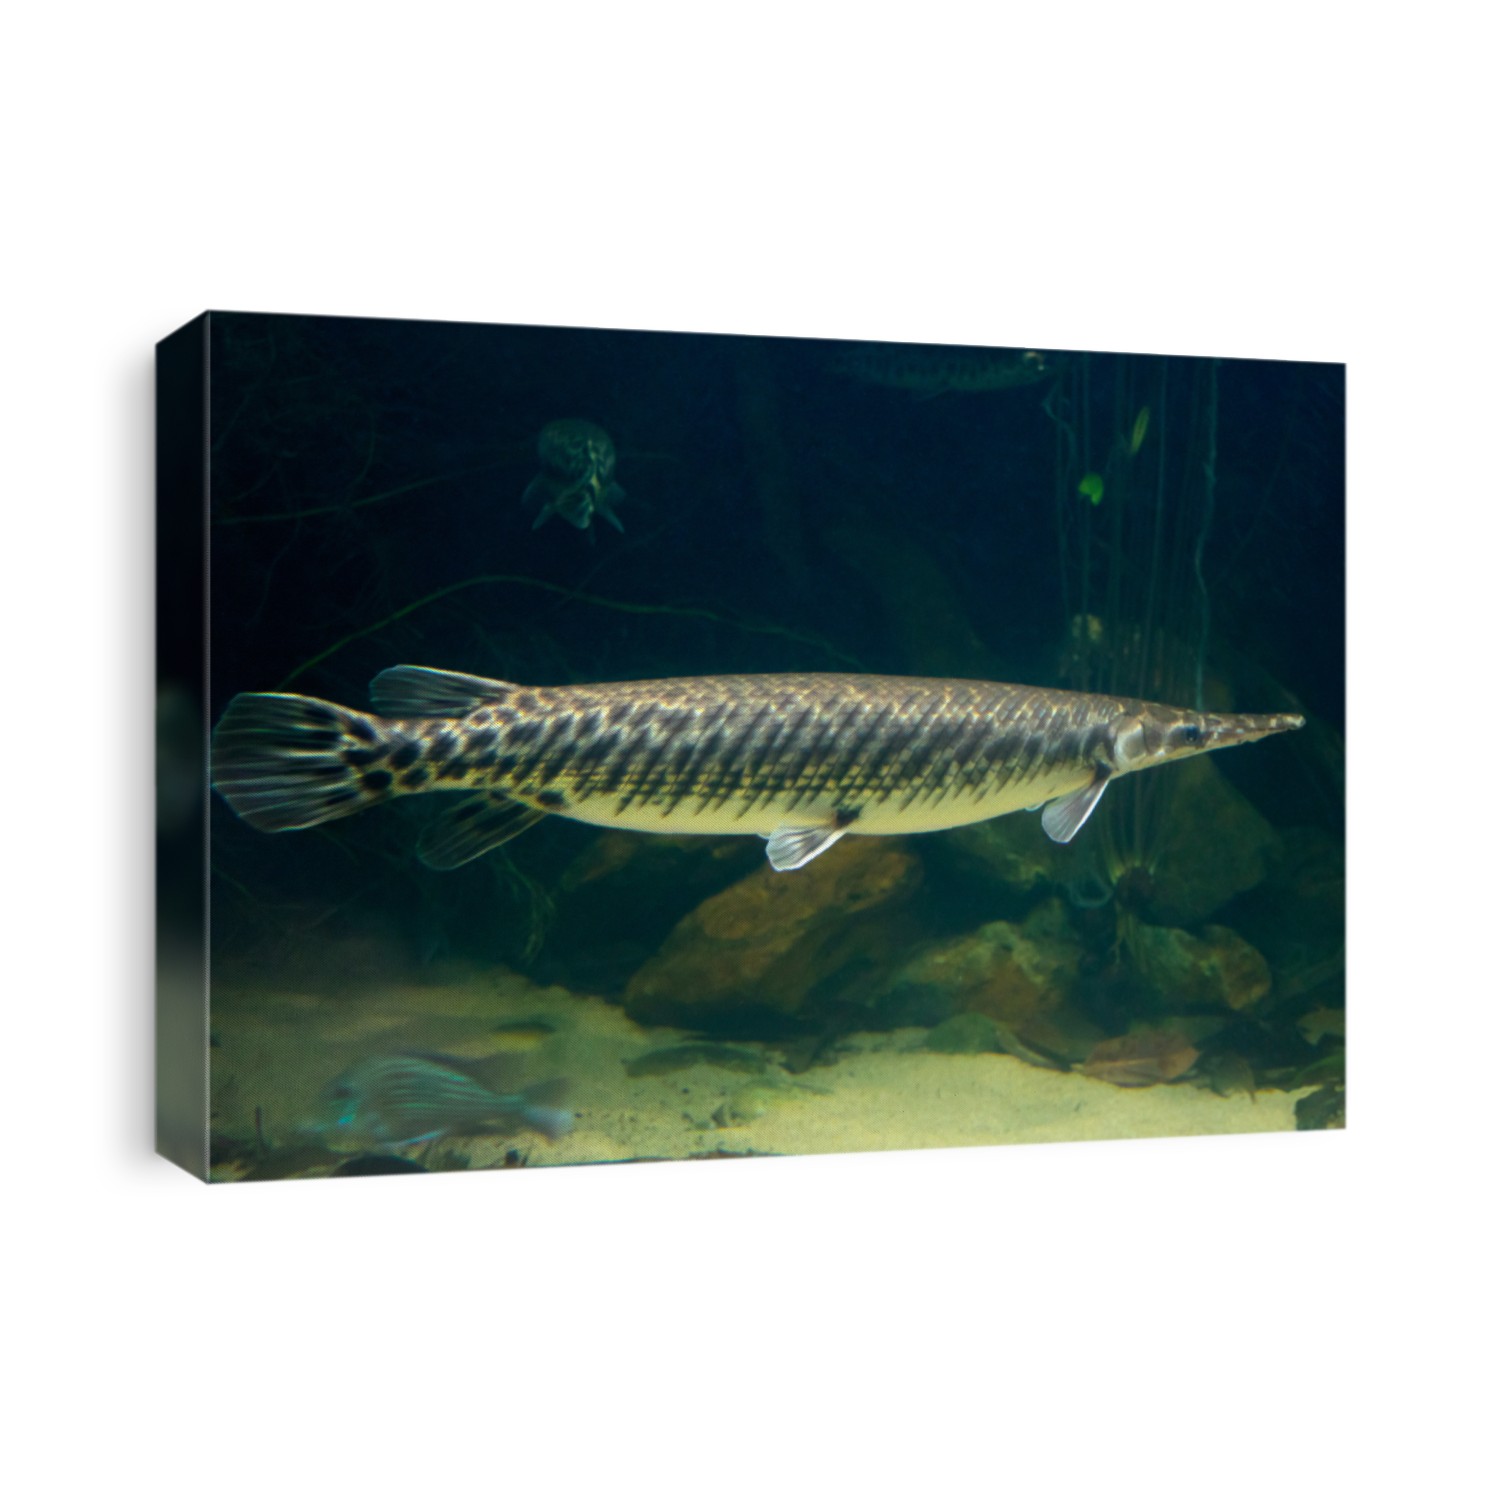 Single Arapaima gigas fish, also known as pirarucu, an endangered specie